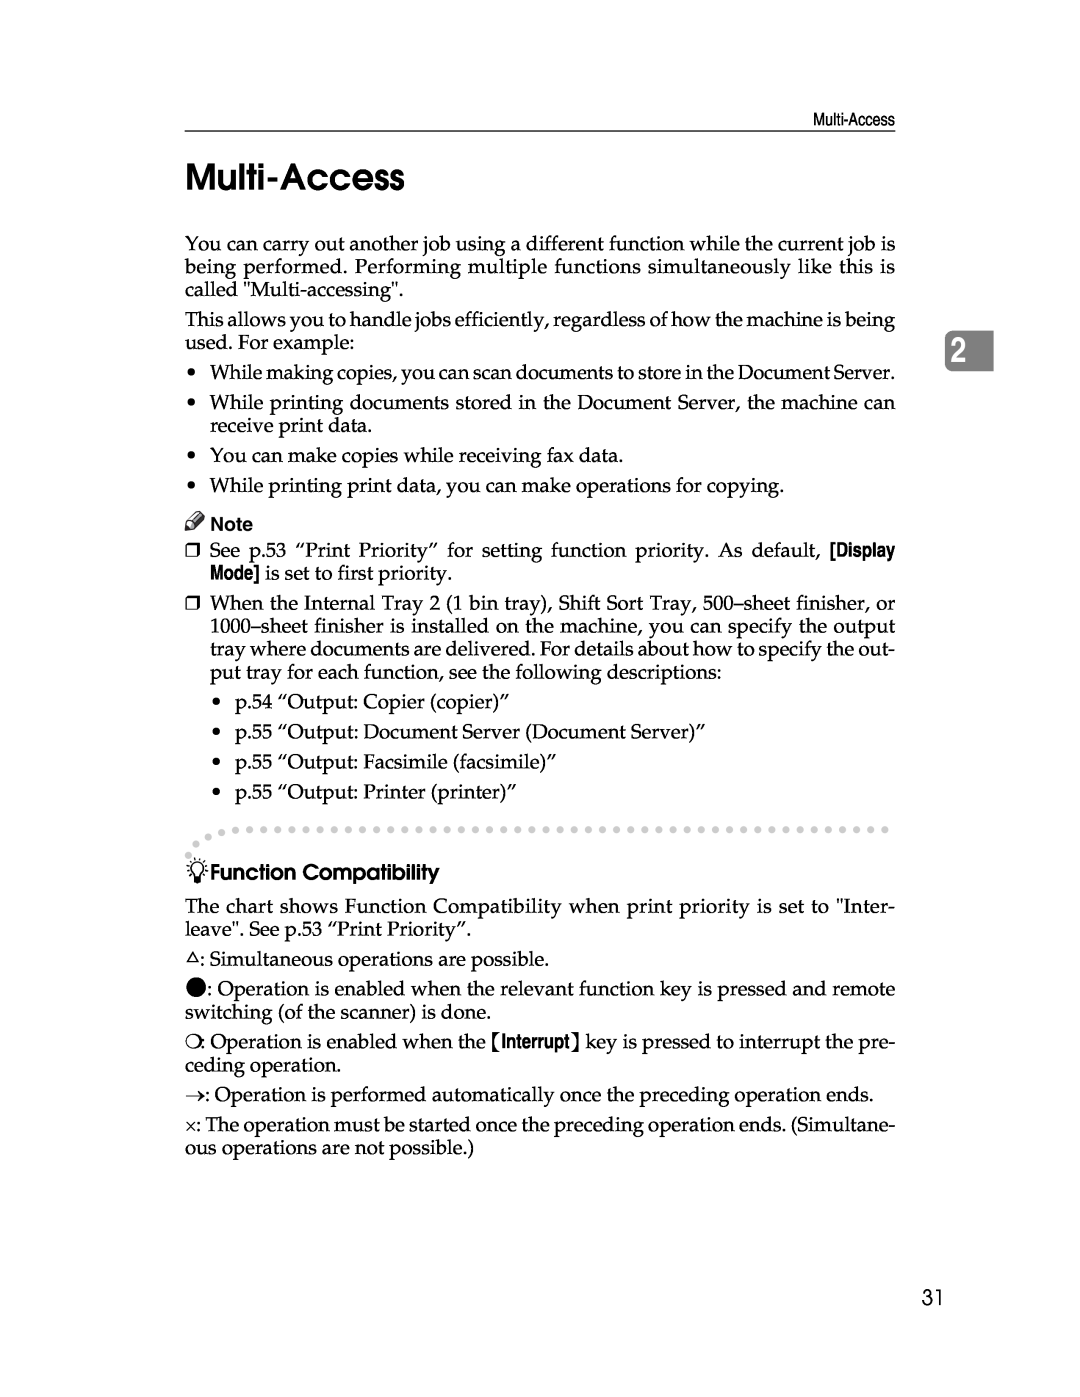 Lanier LD230, LD225 manual Multi-Access, Function Compatibility 